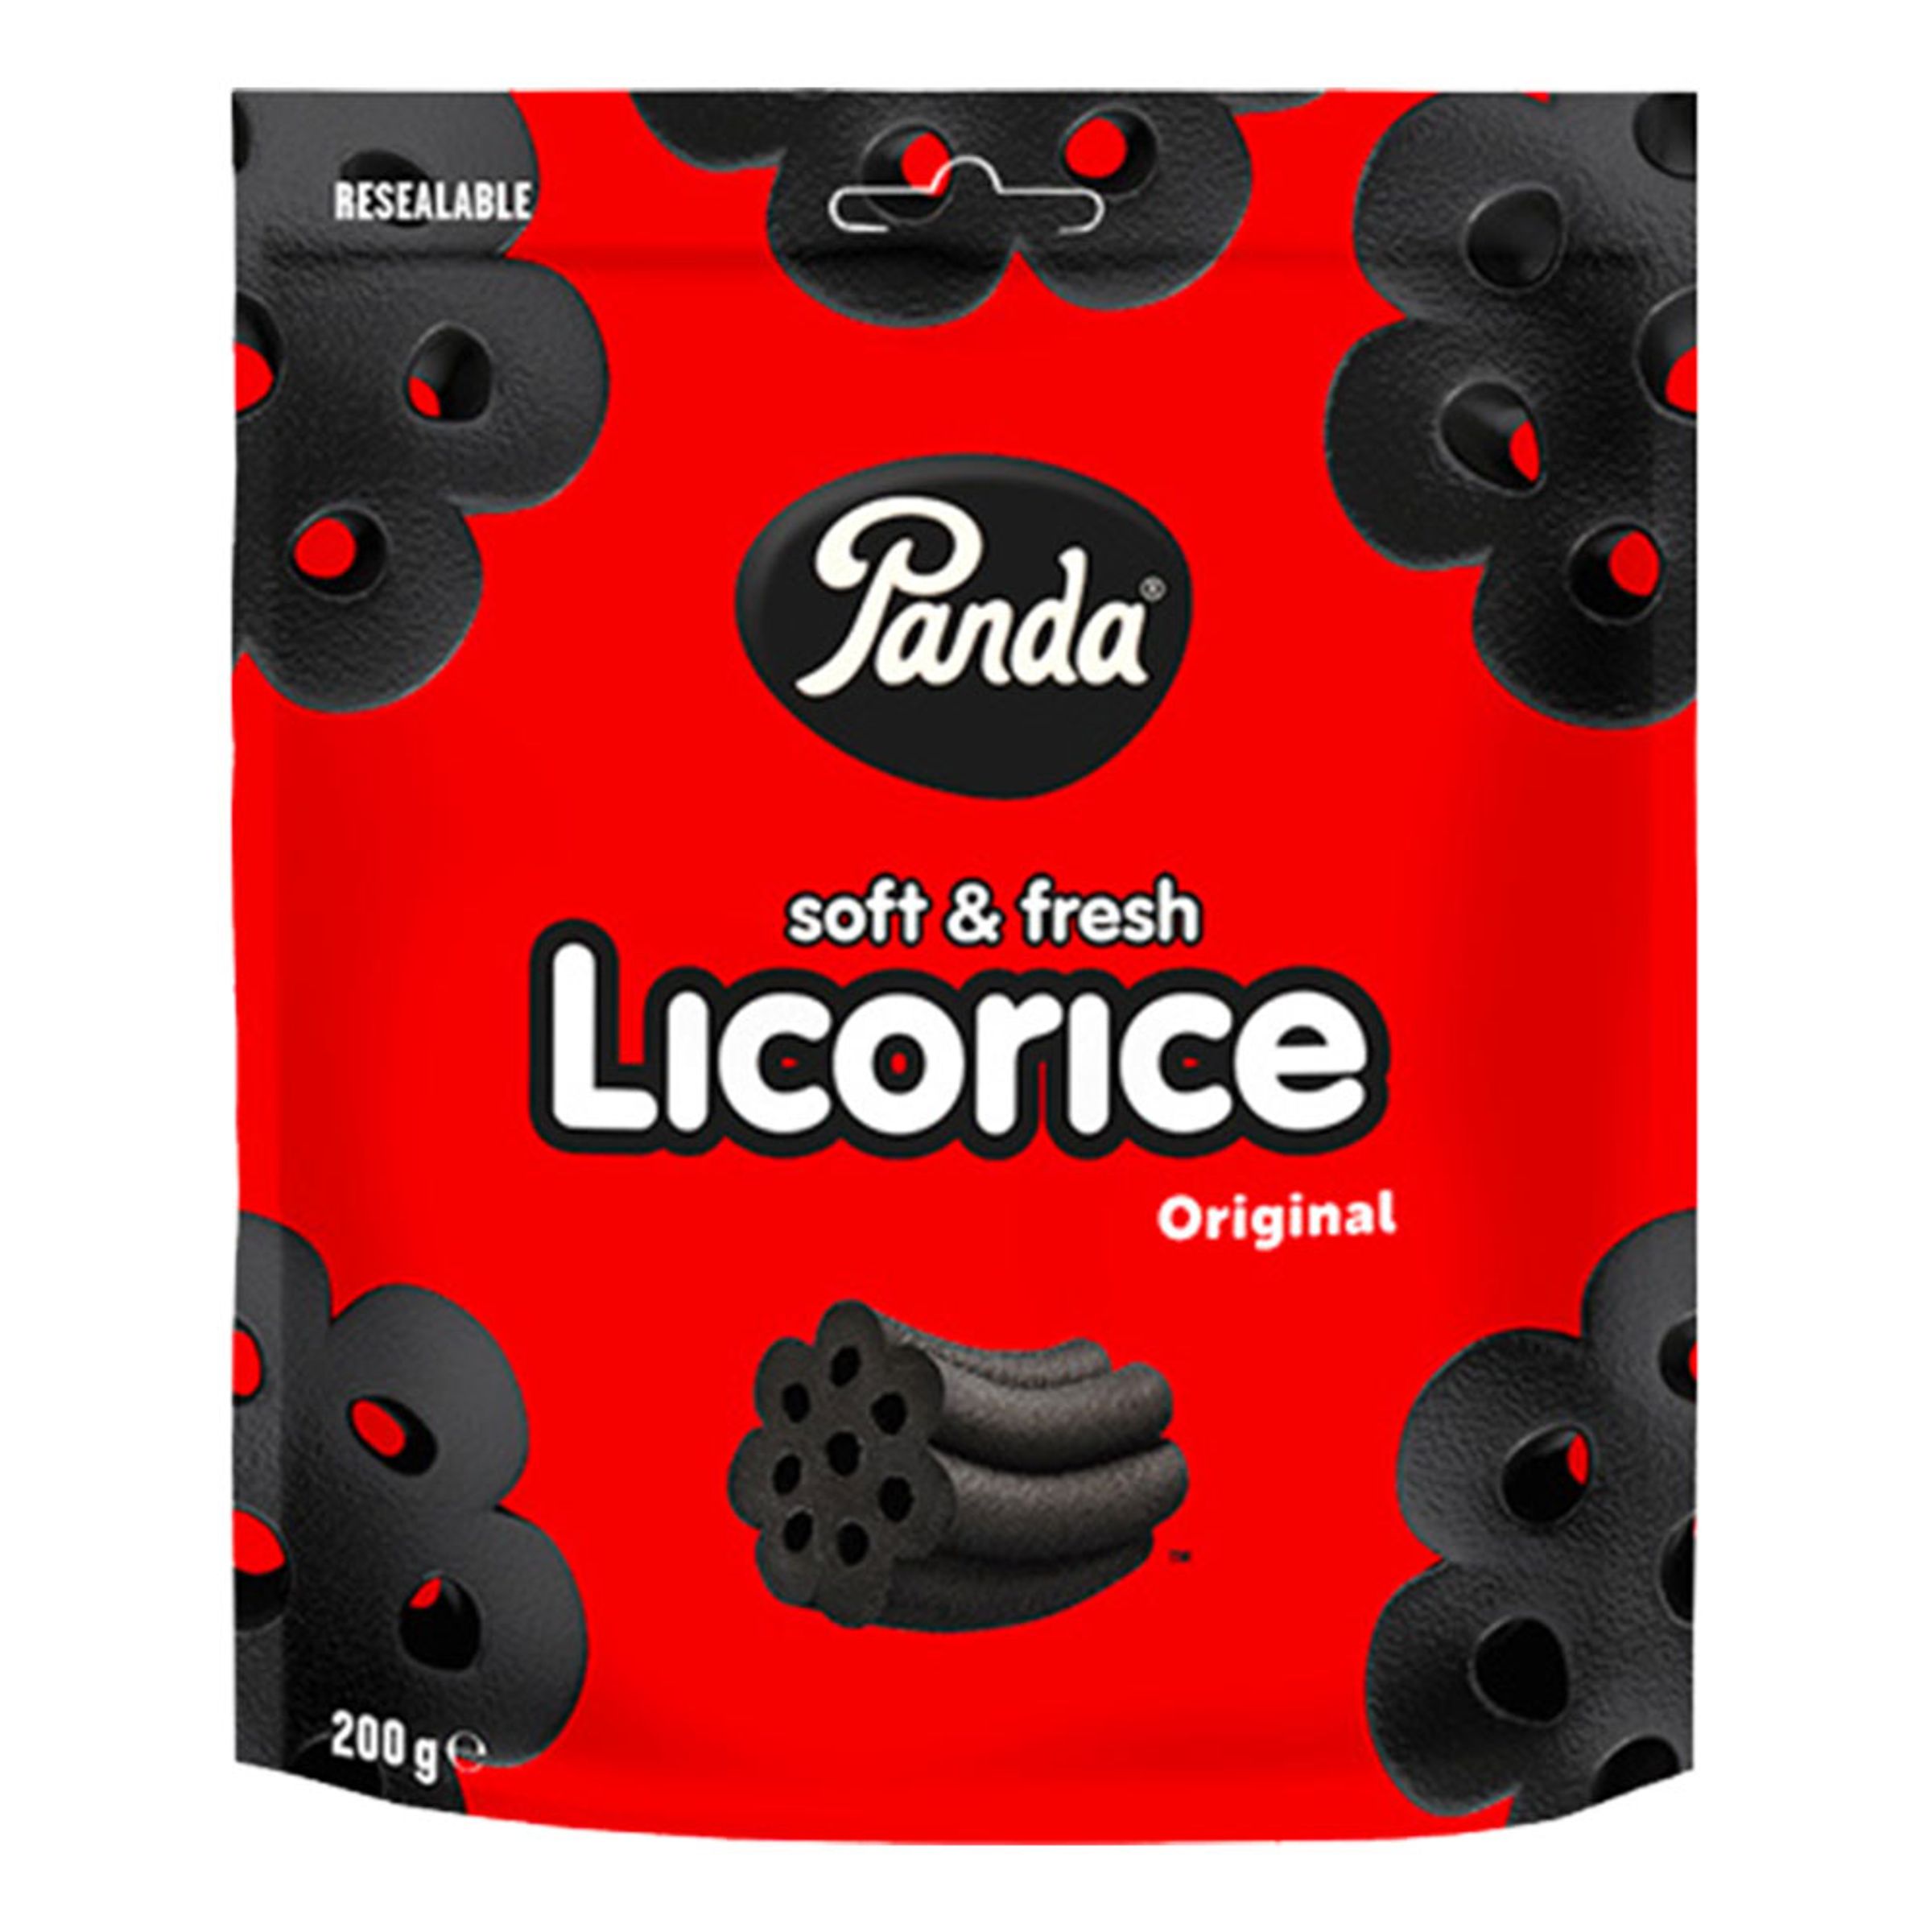 Panda Soft & Fresh Licorice Original - 200 gram